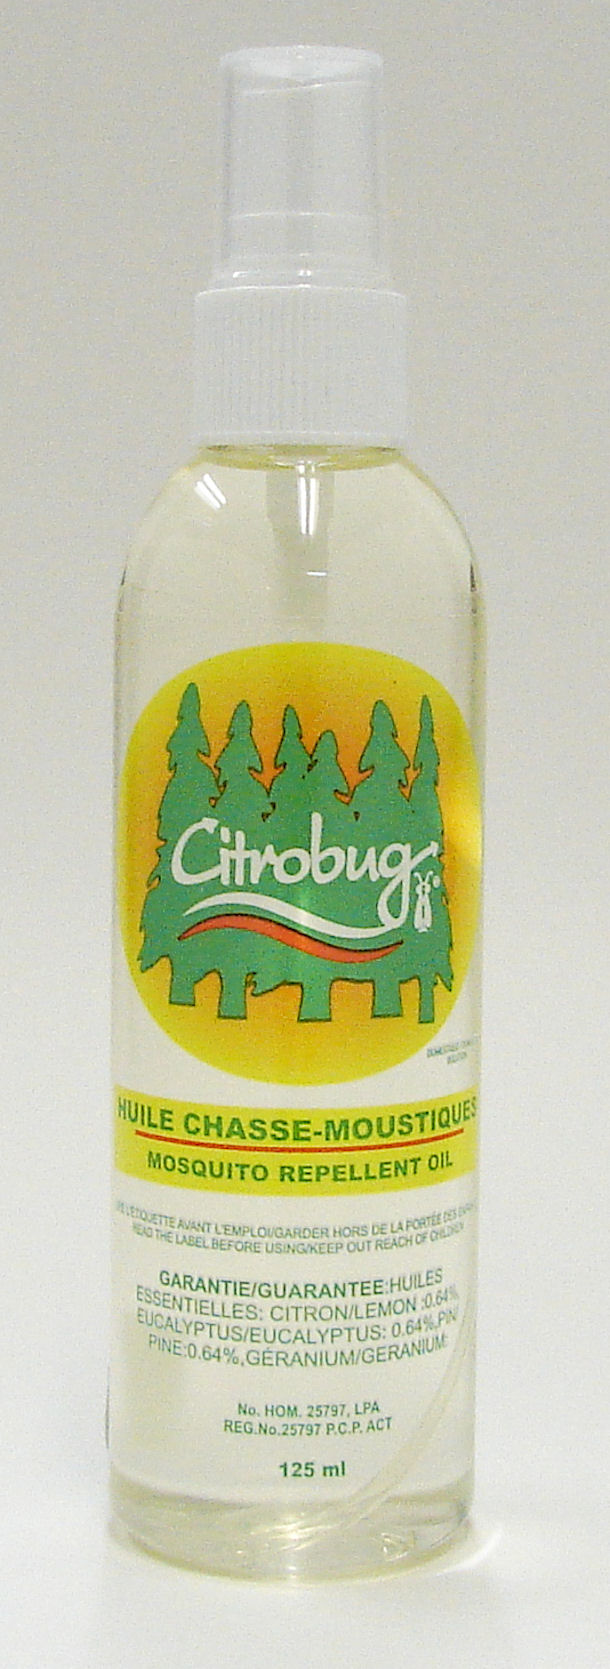 citrobug mosquito repellent oil, 125 ml (heloise laboratoire)